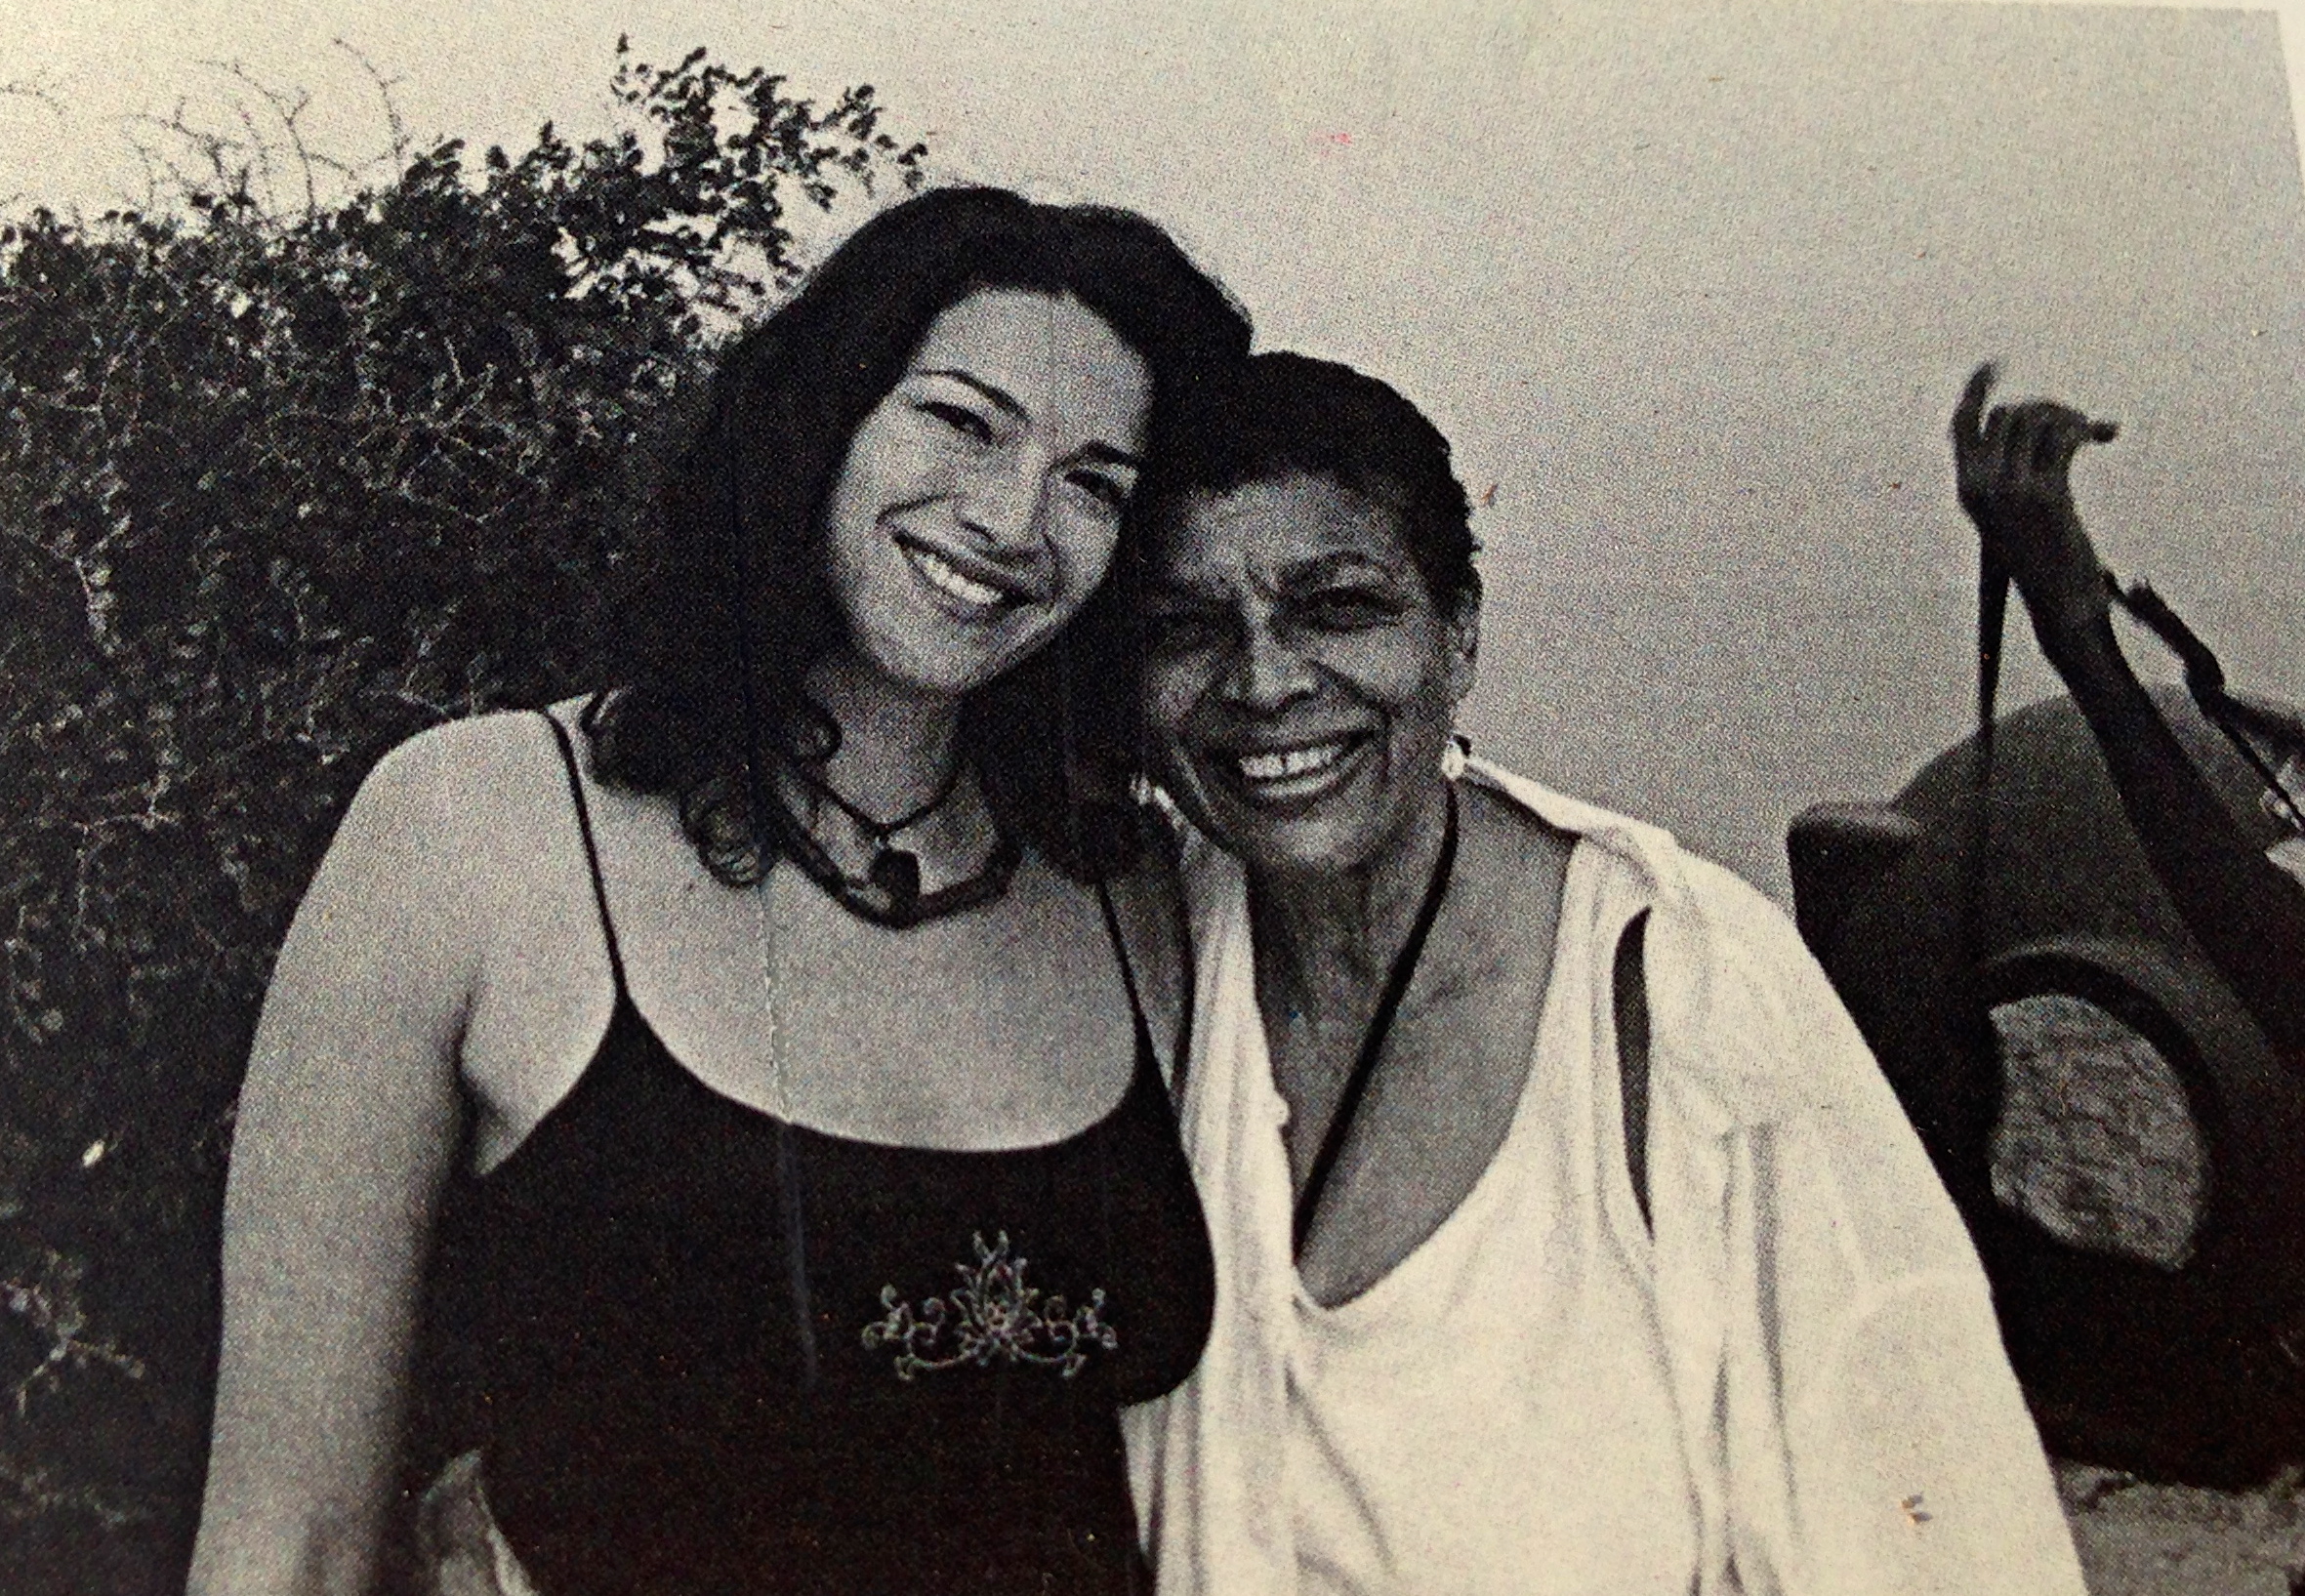 Alli Hunter Joseph and her late Shinnecock mother, Barbara Joseph